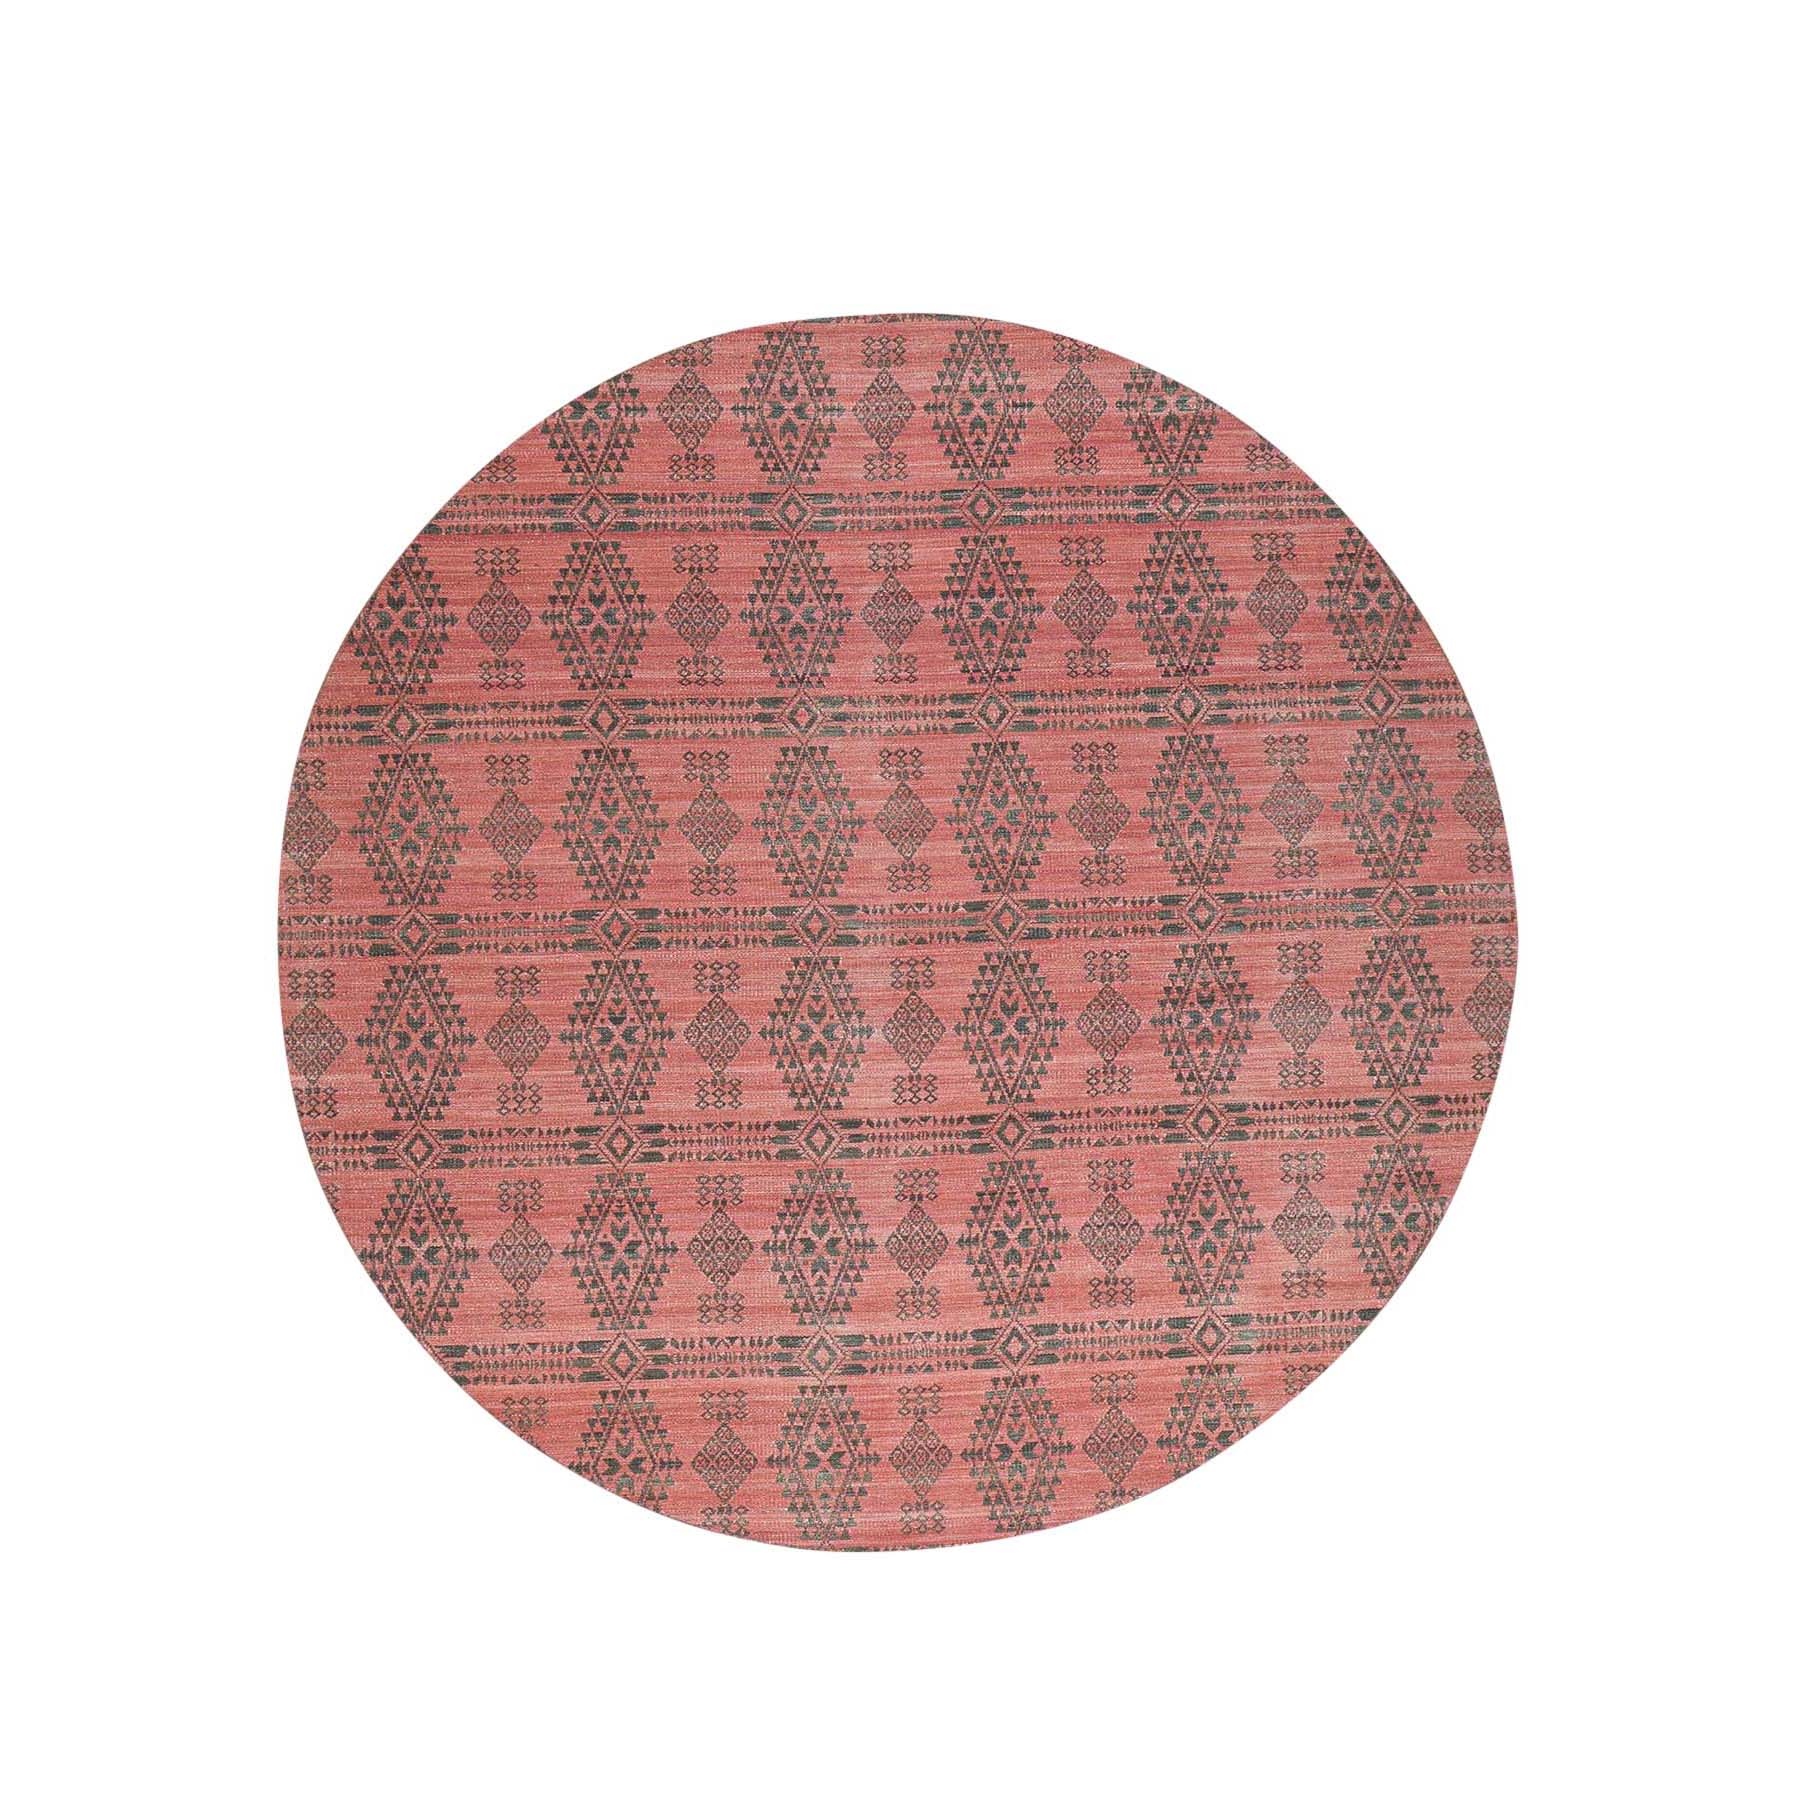 10'x10' Hand-Woven Reversible Kilim Flat Weave Round Oriental Rug 